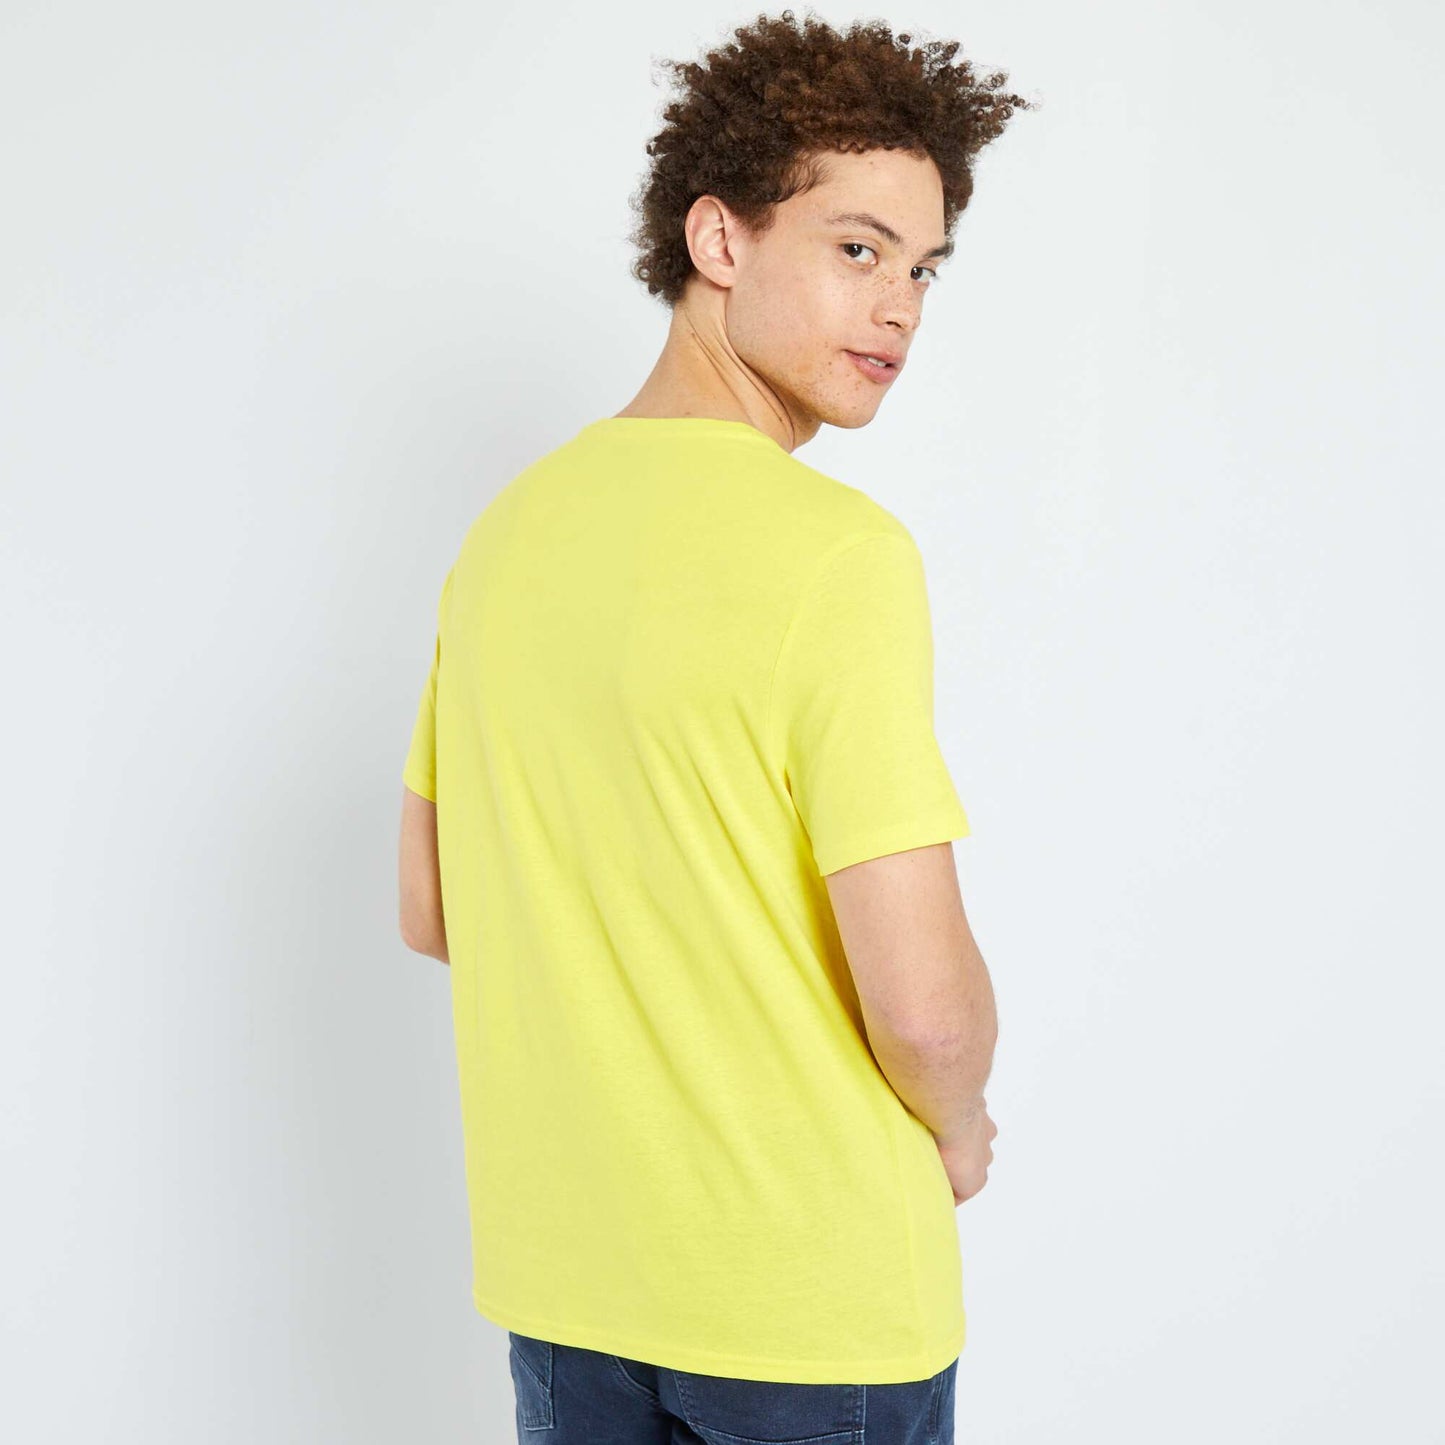 T-shirt en jersey uni jaune